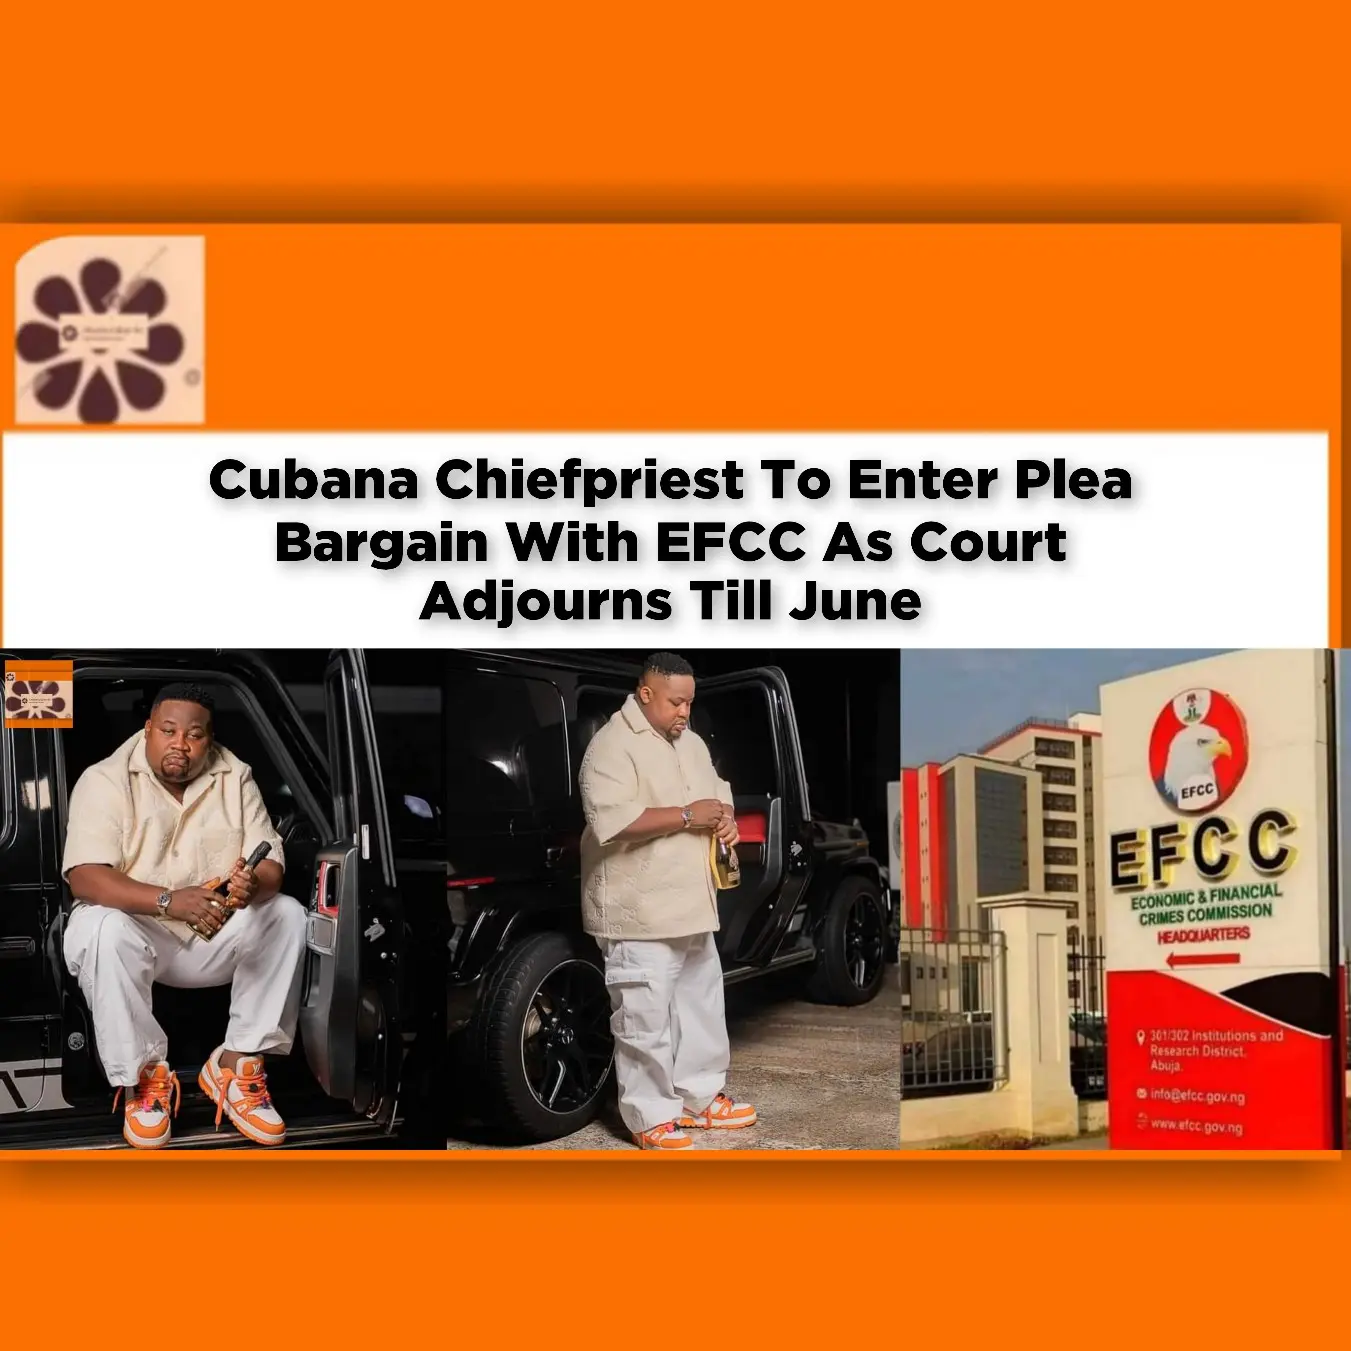 Cubana Chiefpriest To Enter Plea Bargain With EFCC As Court Adjourns Till June ~ OsazuwaAkonedo #Bawa